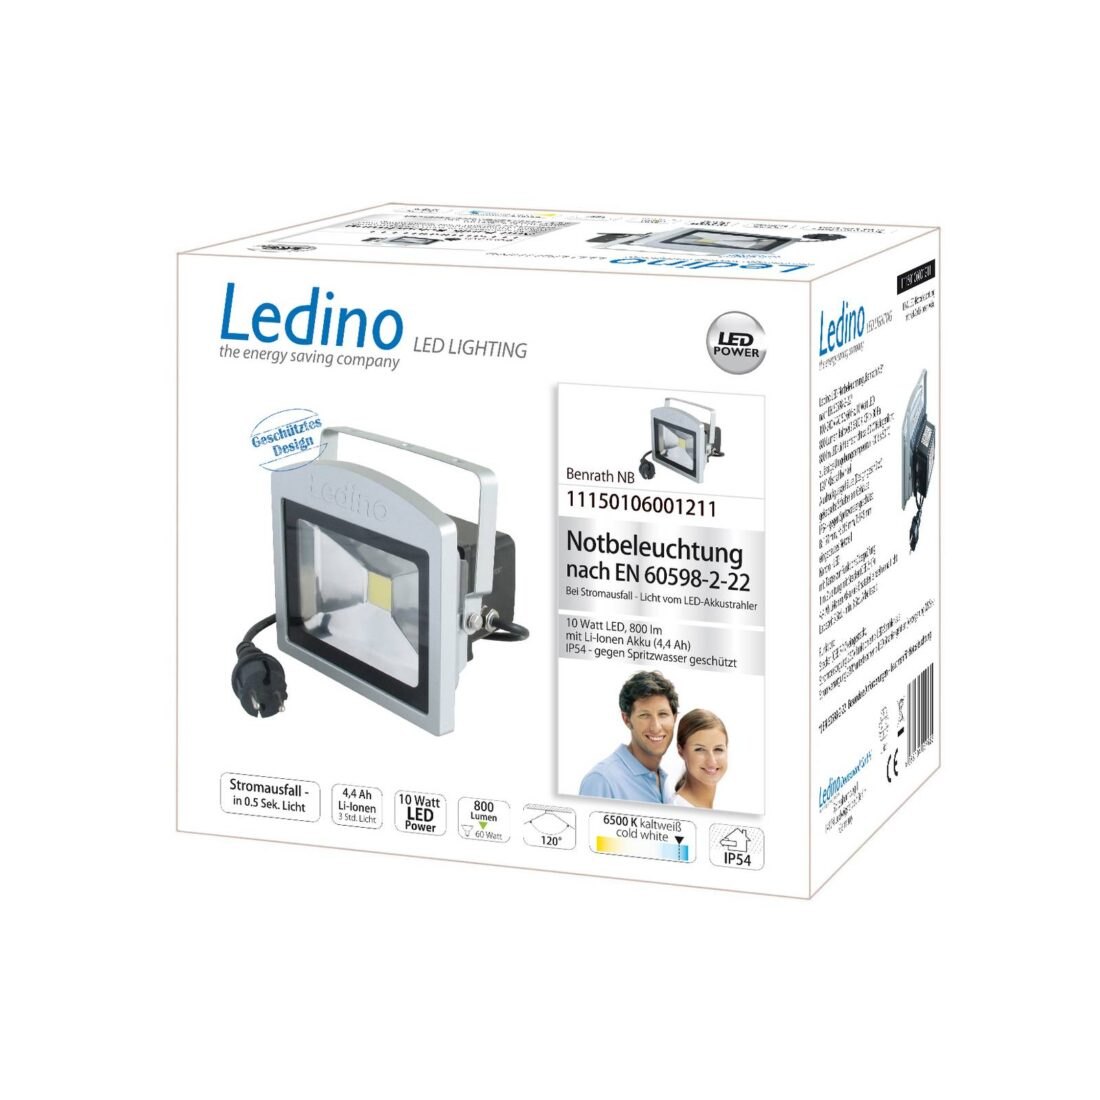 Ledino LED reflektor Benrath NB